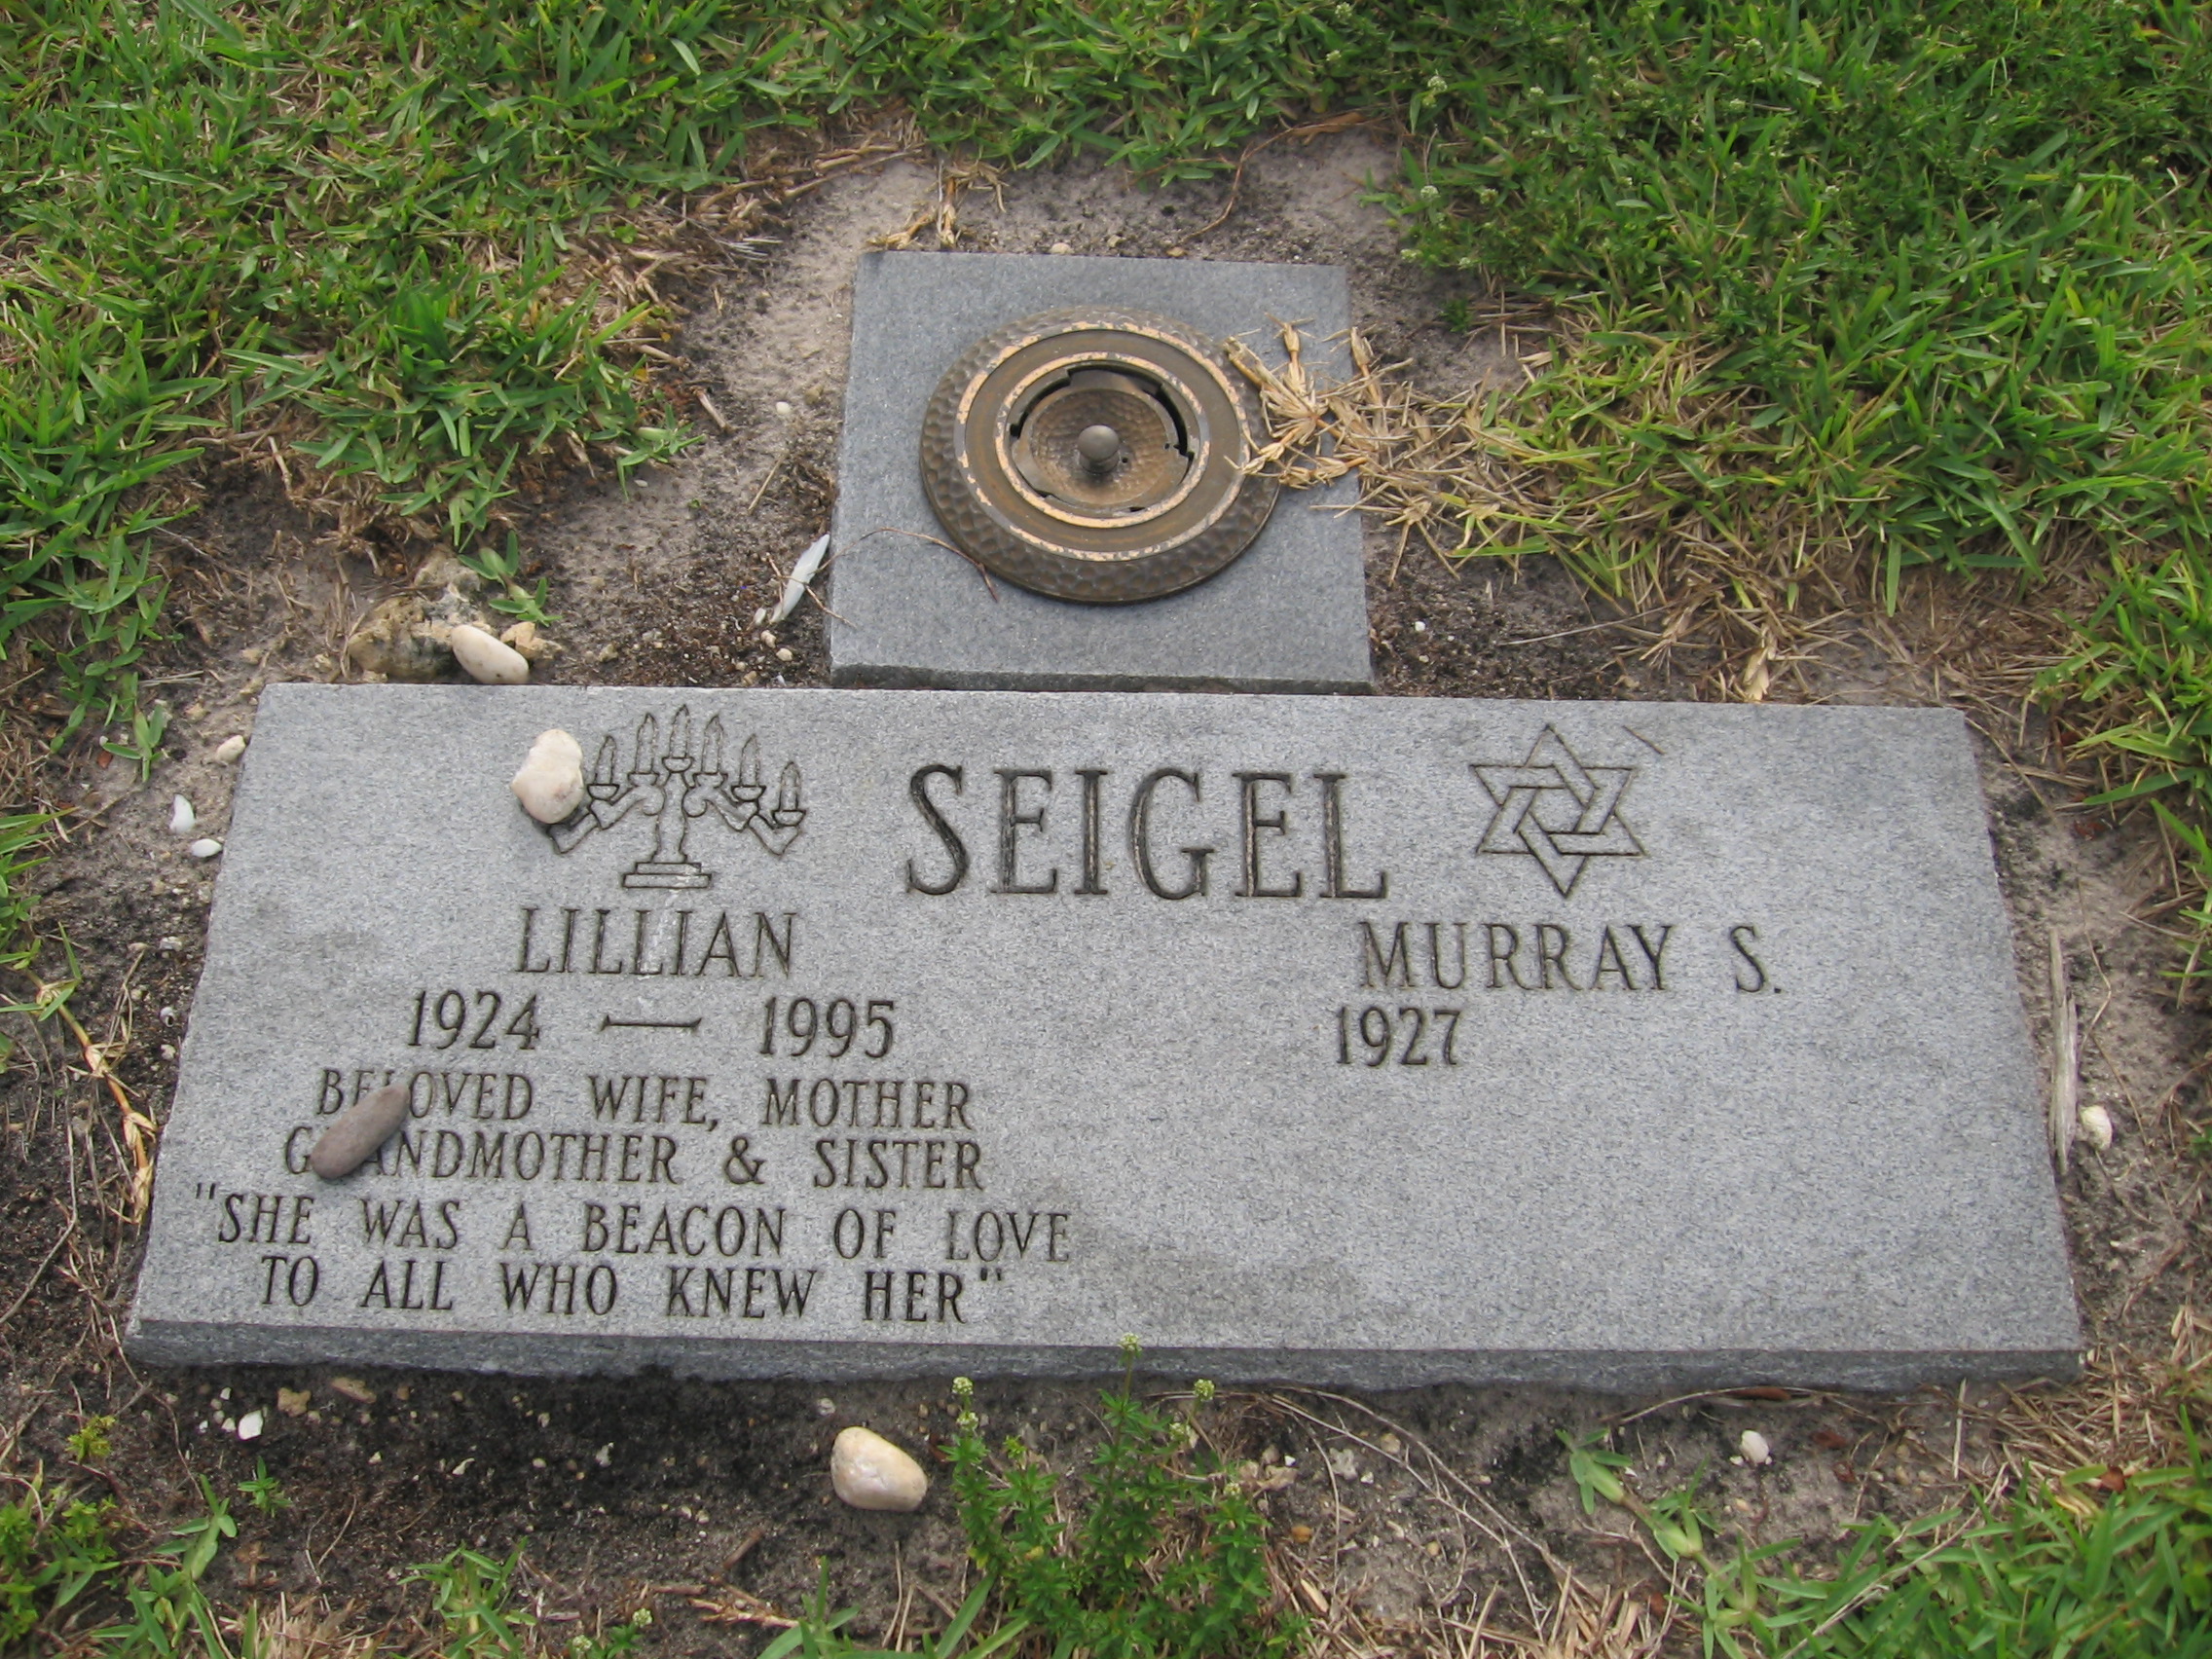 Lillian Seigel